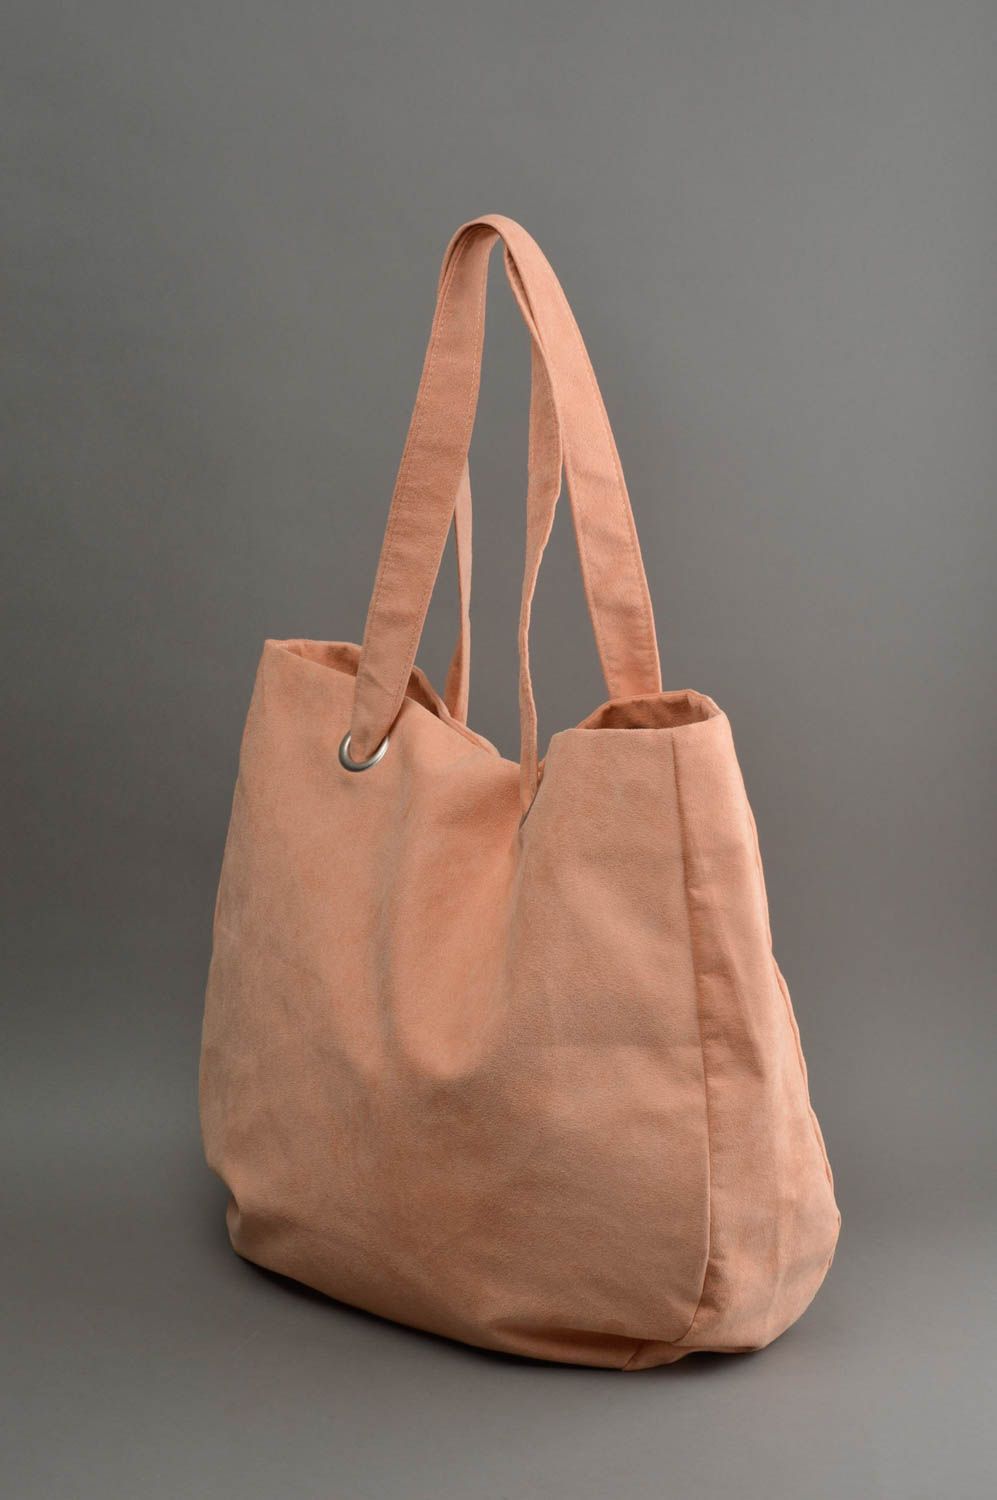 Large bag handmade cloth handbag pink fabric purse accessories for women photo 2